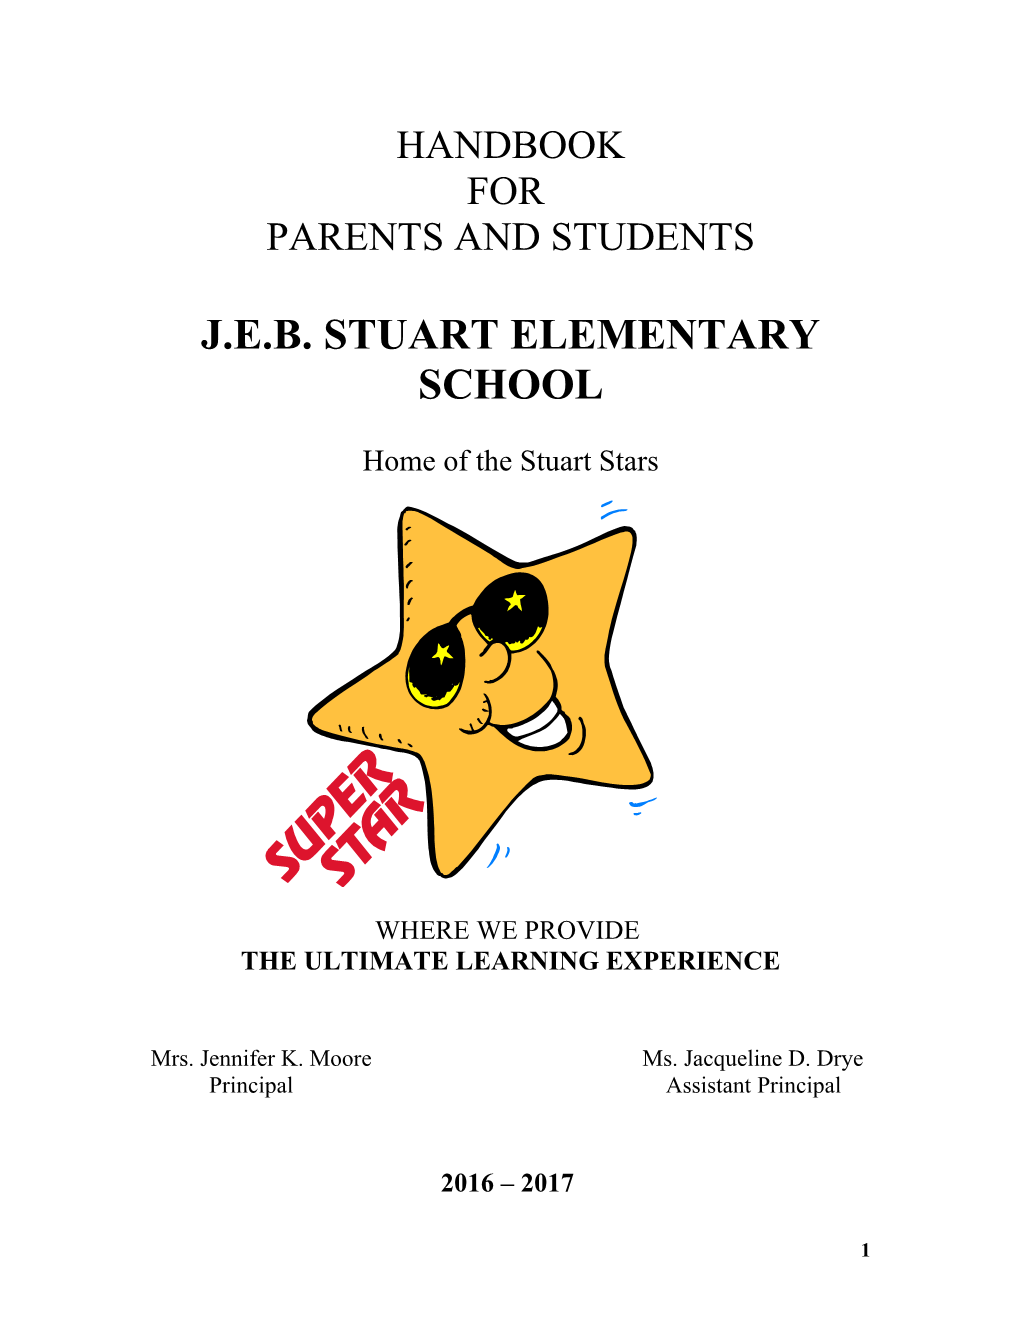 J.E.B. Stuart Elementary School